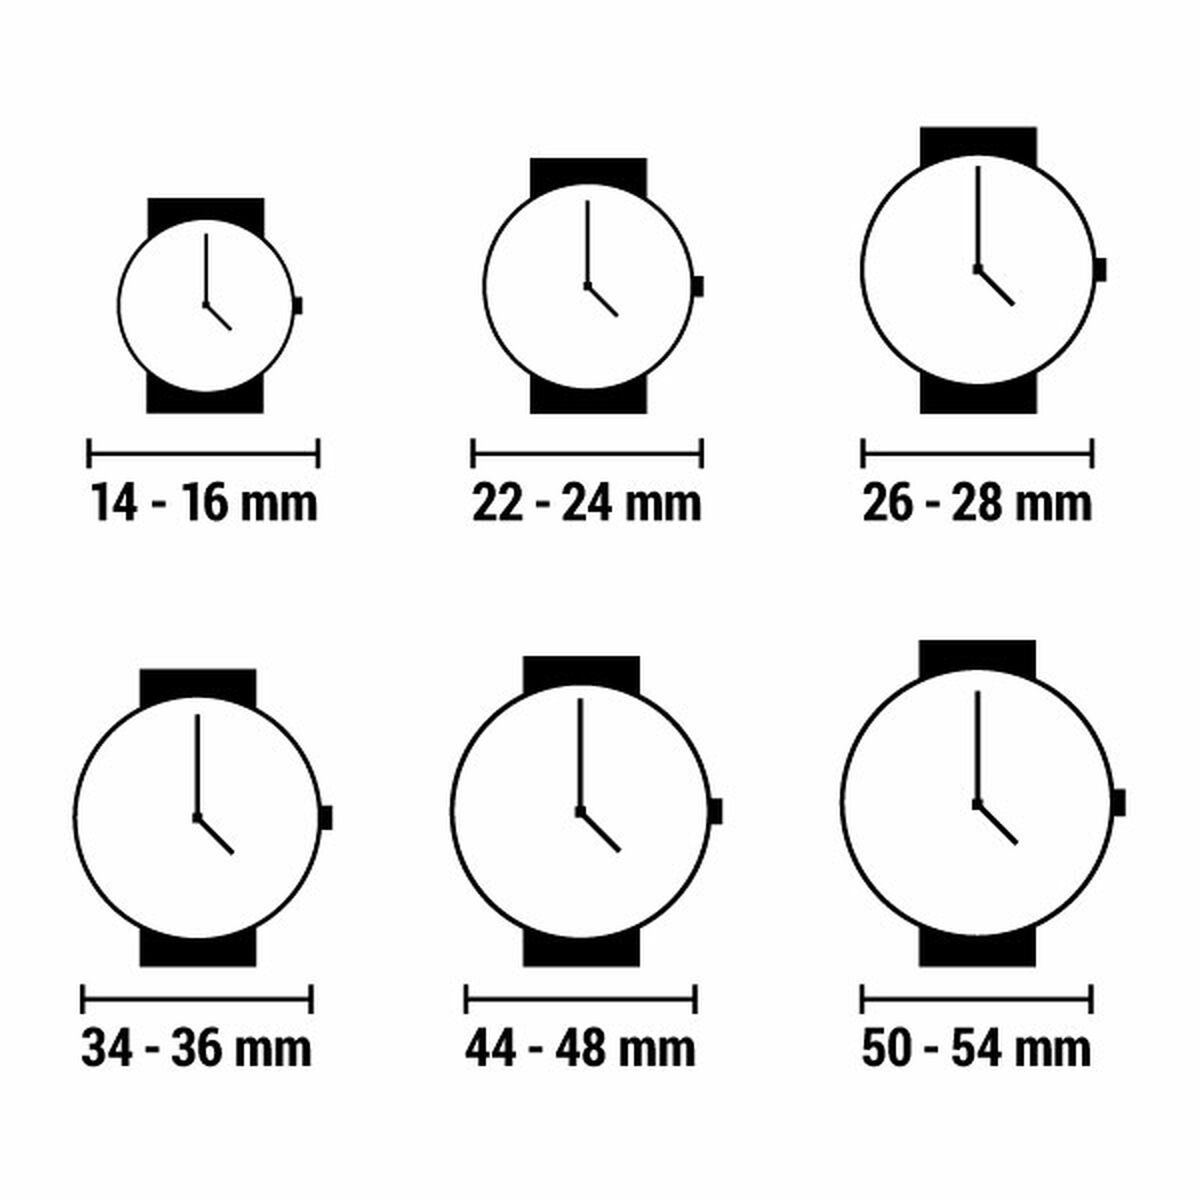 Horloge Dames Maserati SOLAR (Ø 32 mm)